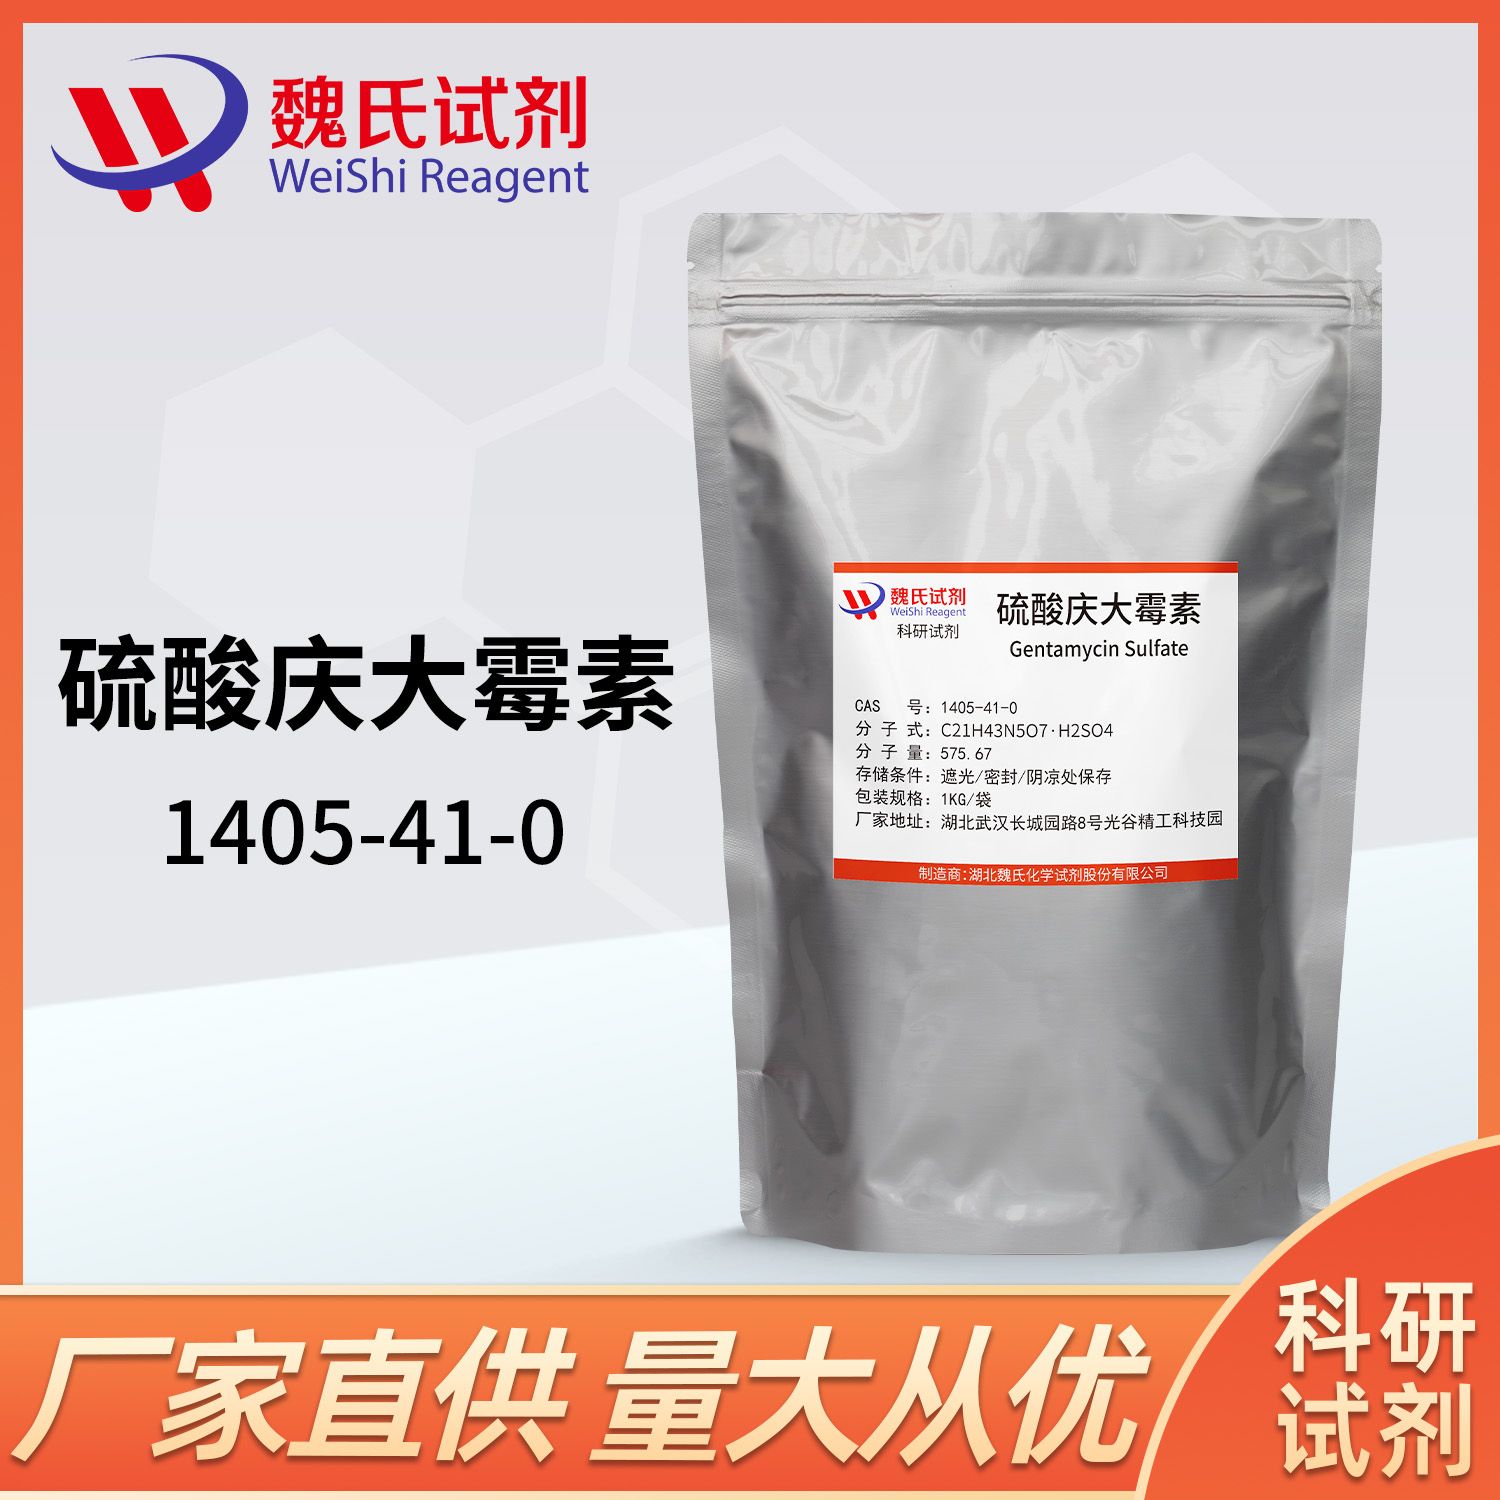 1405-41-0 /硫酸庆大霉素/Gentamycin Sulfate